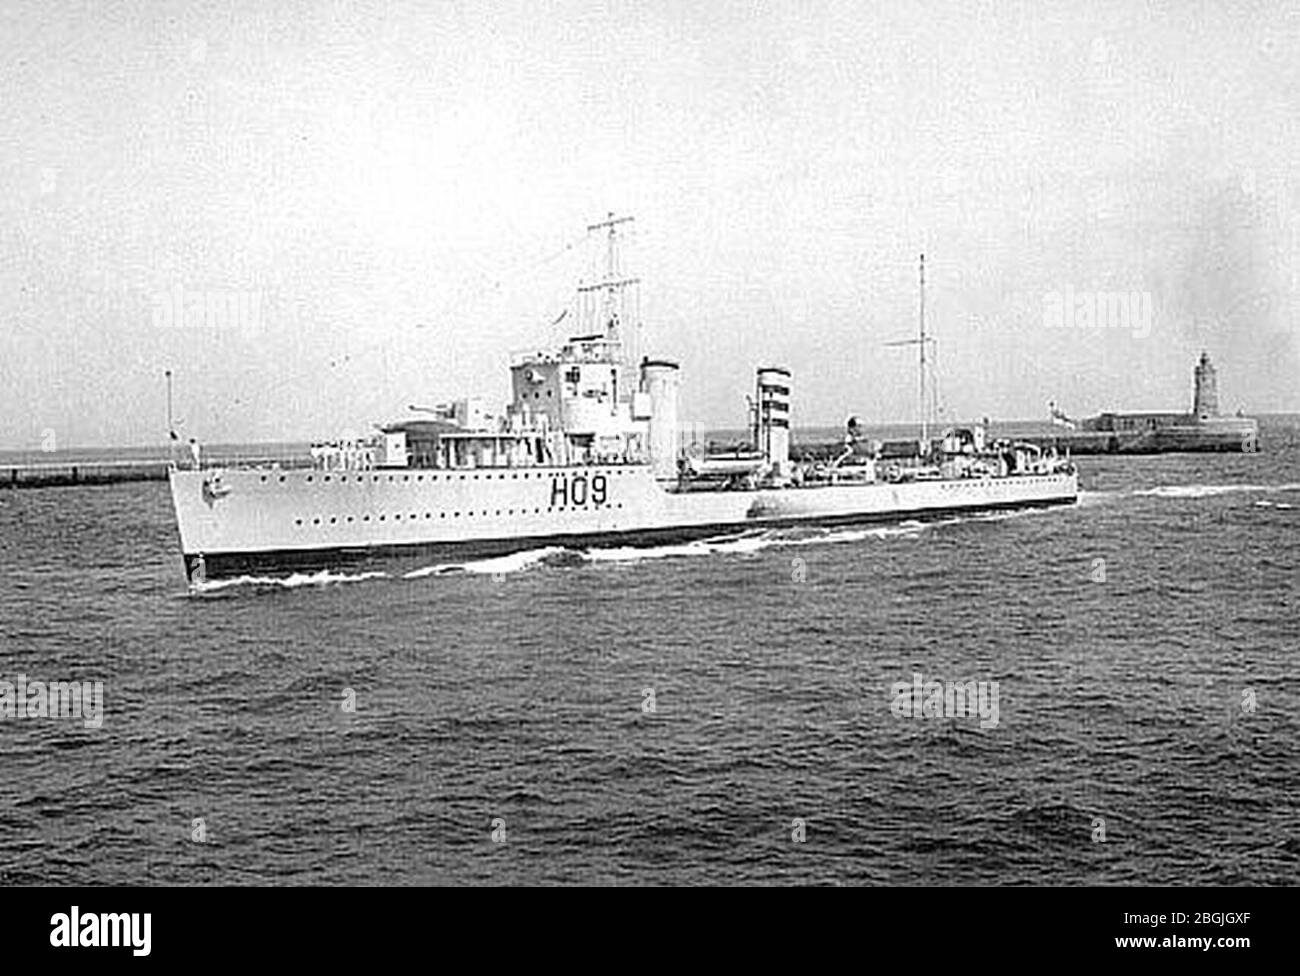 HMS ACASTA (H09). Stock Photo